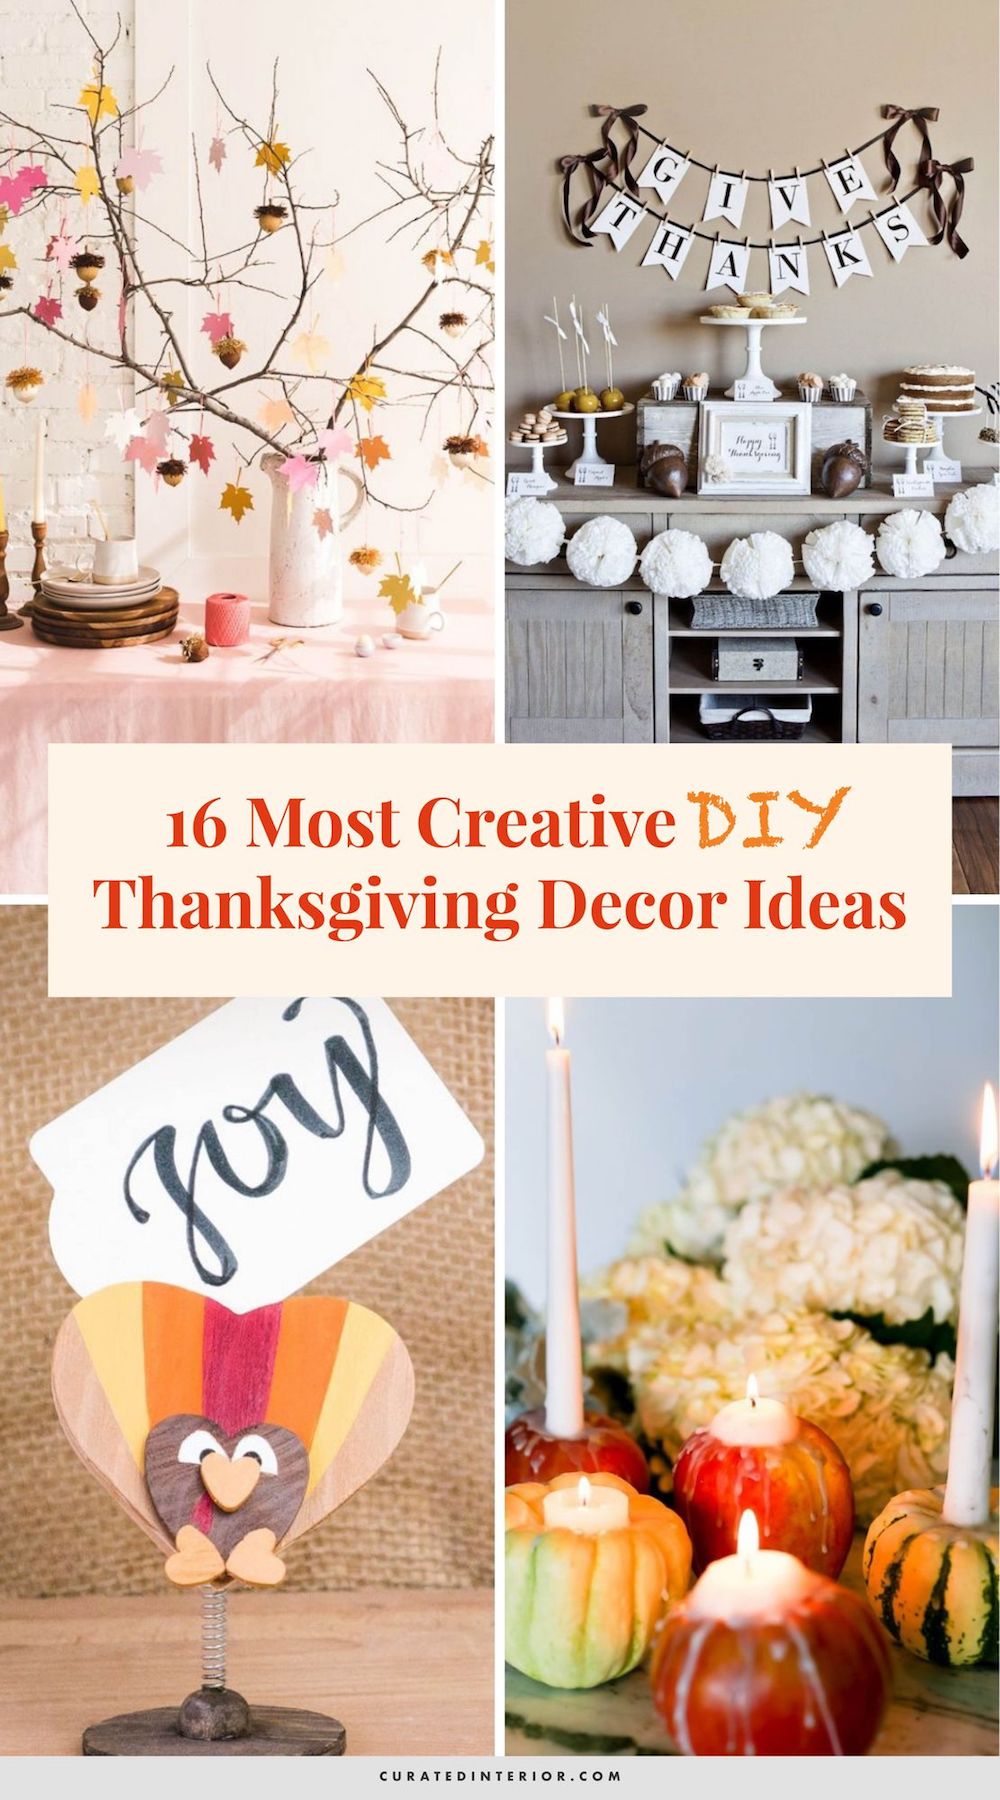 16 Most Creative DIY Thanksgiving Decor Ideas